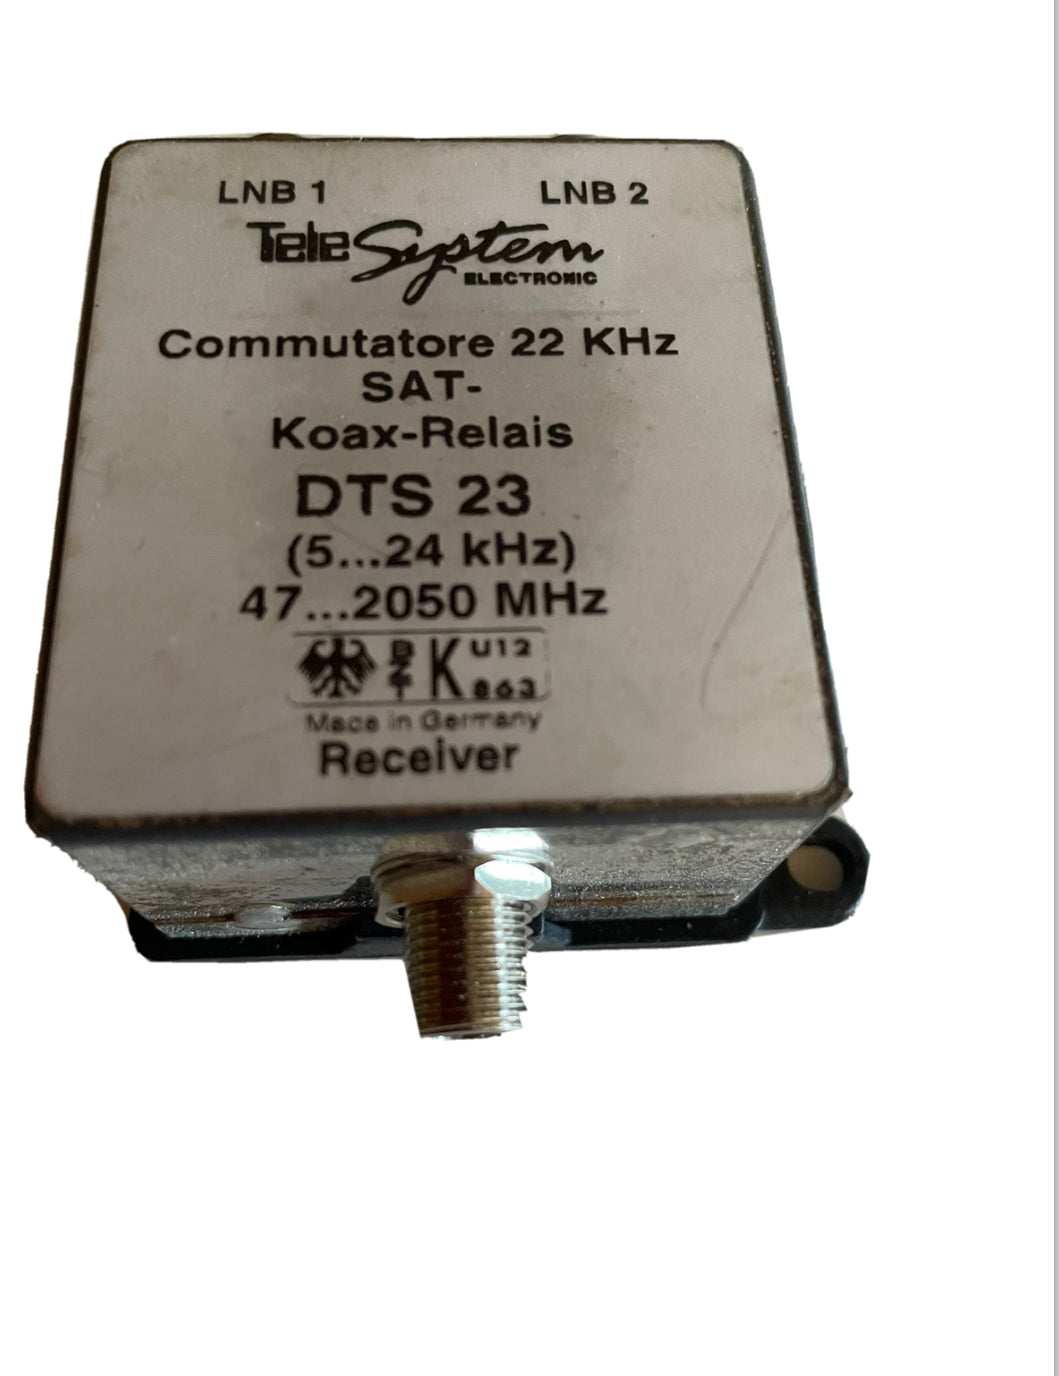 Tele System ELETTRONICO LNB2 Commutatore 22 KHz SAT- Koax-Relais DTS23 (5...24 kHz) 47...2050 MHz